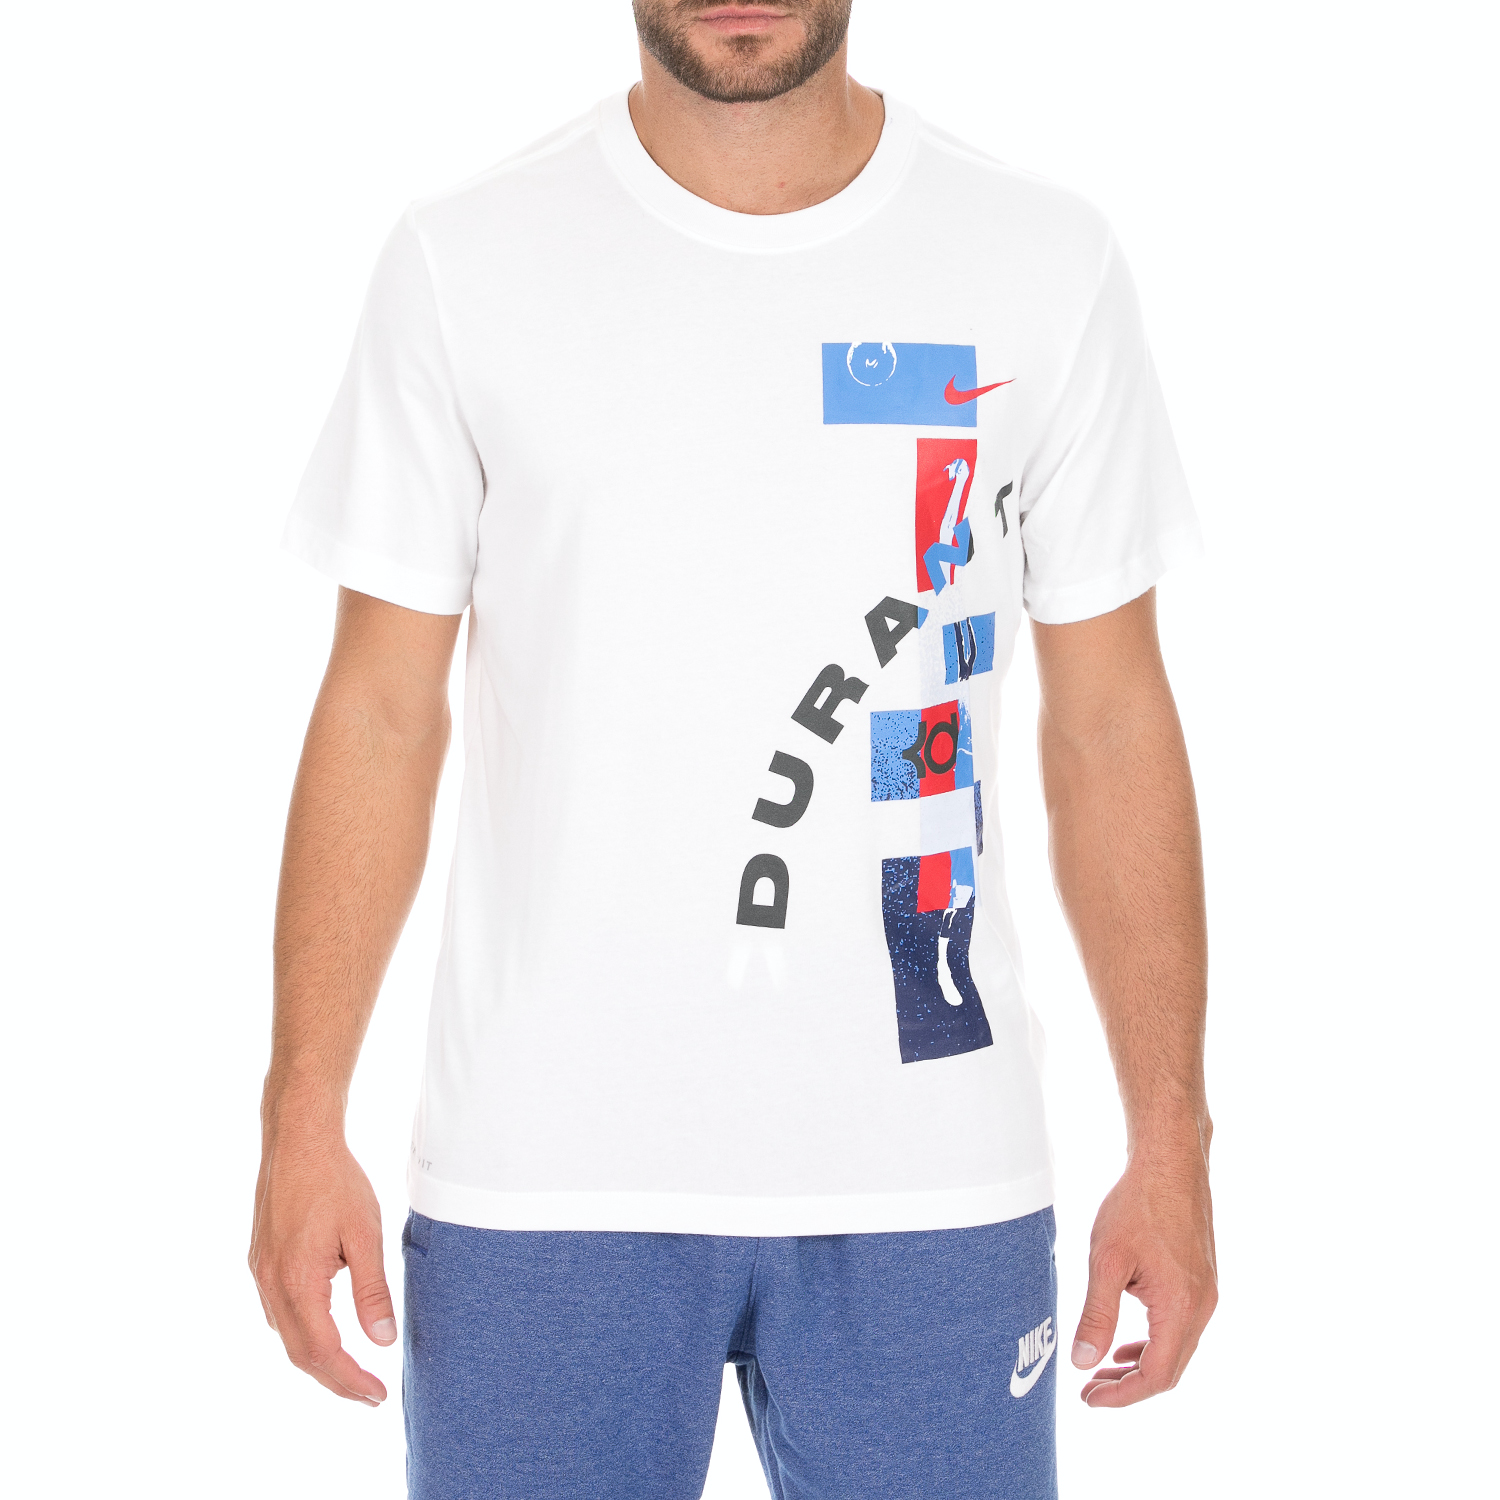 NIKE - Ανδρικό t-shirt NIKE DF 90 λευκό Ανδρικά/Ρούχα/Αθλητικά/T-shirt